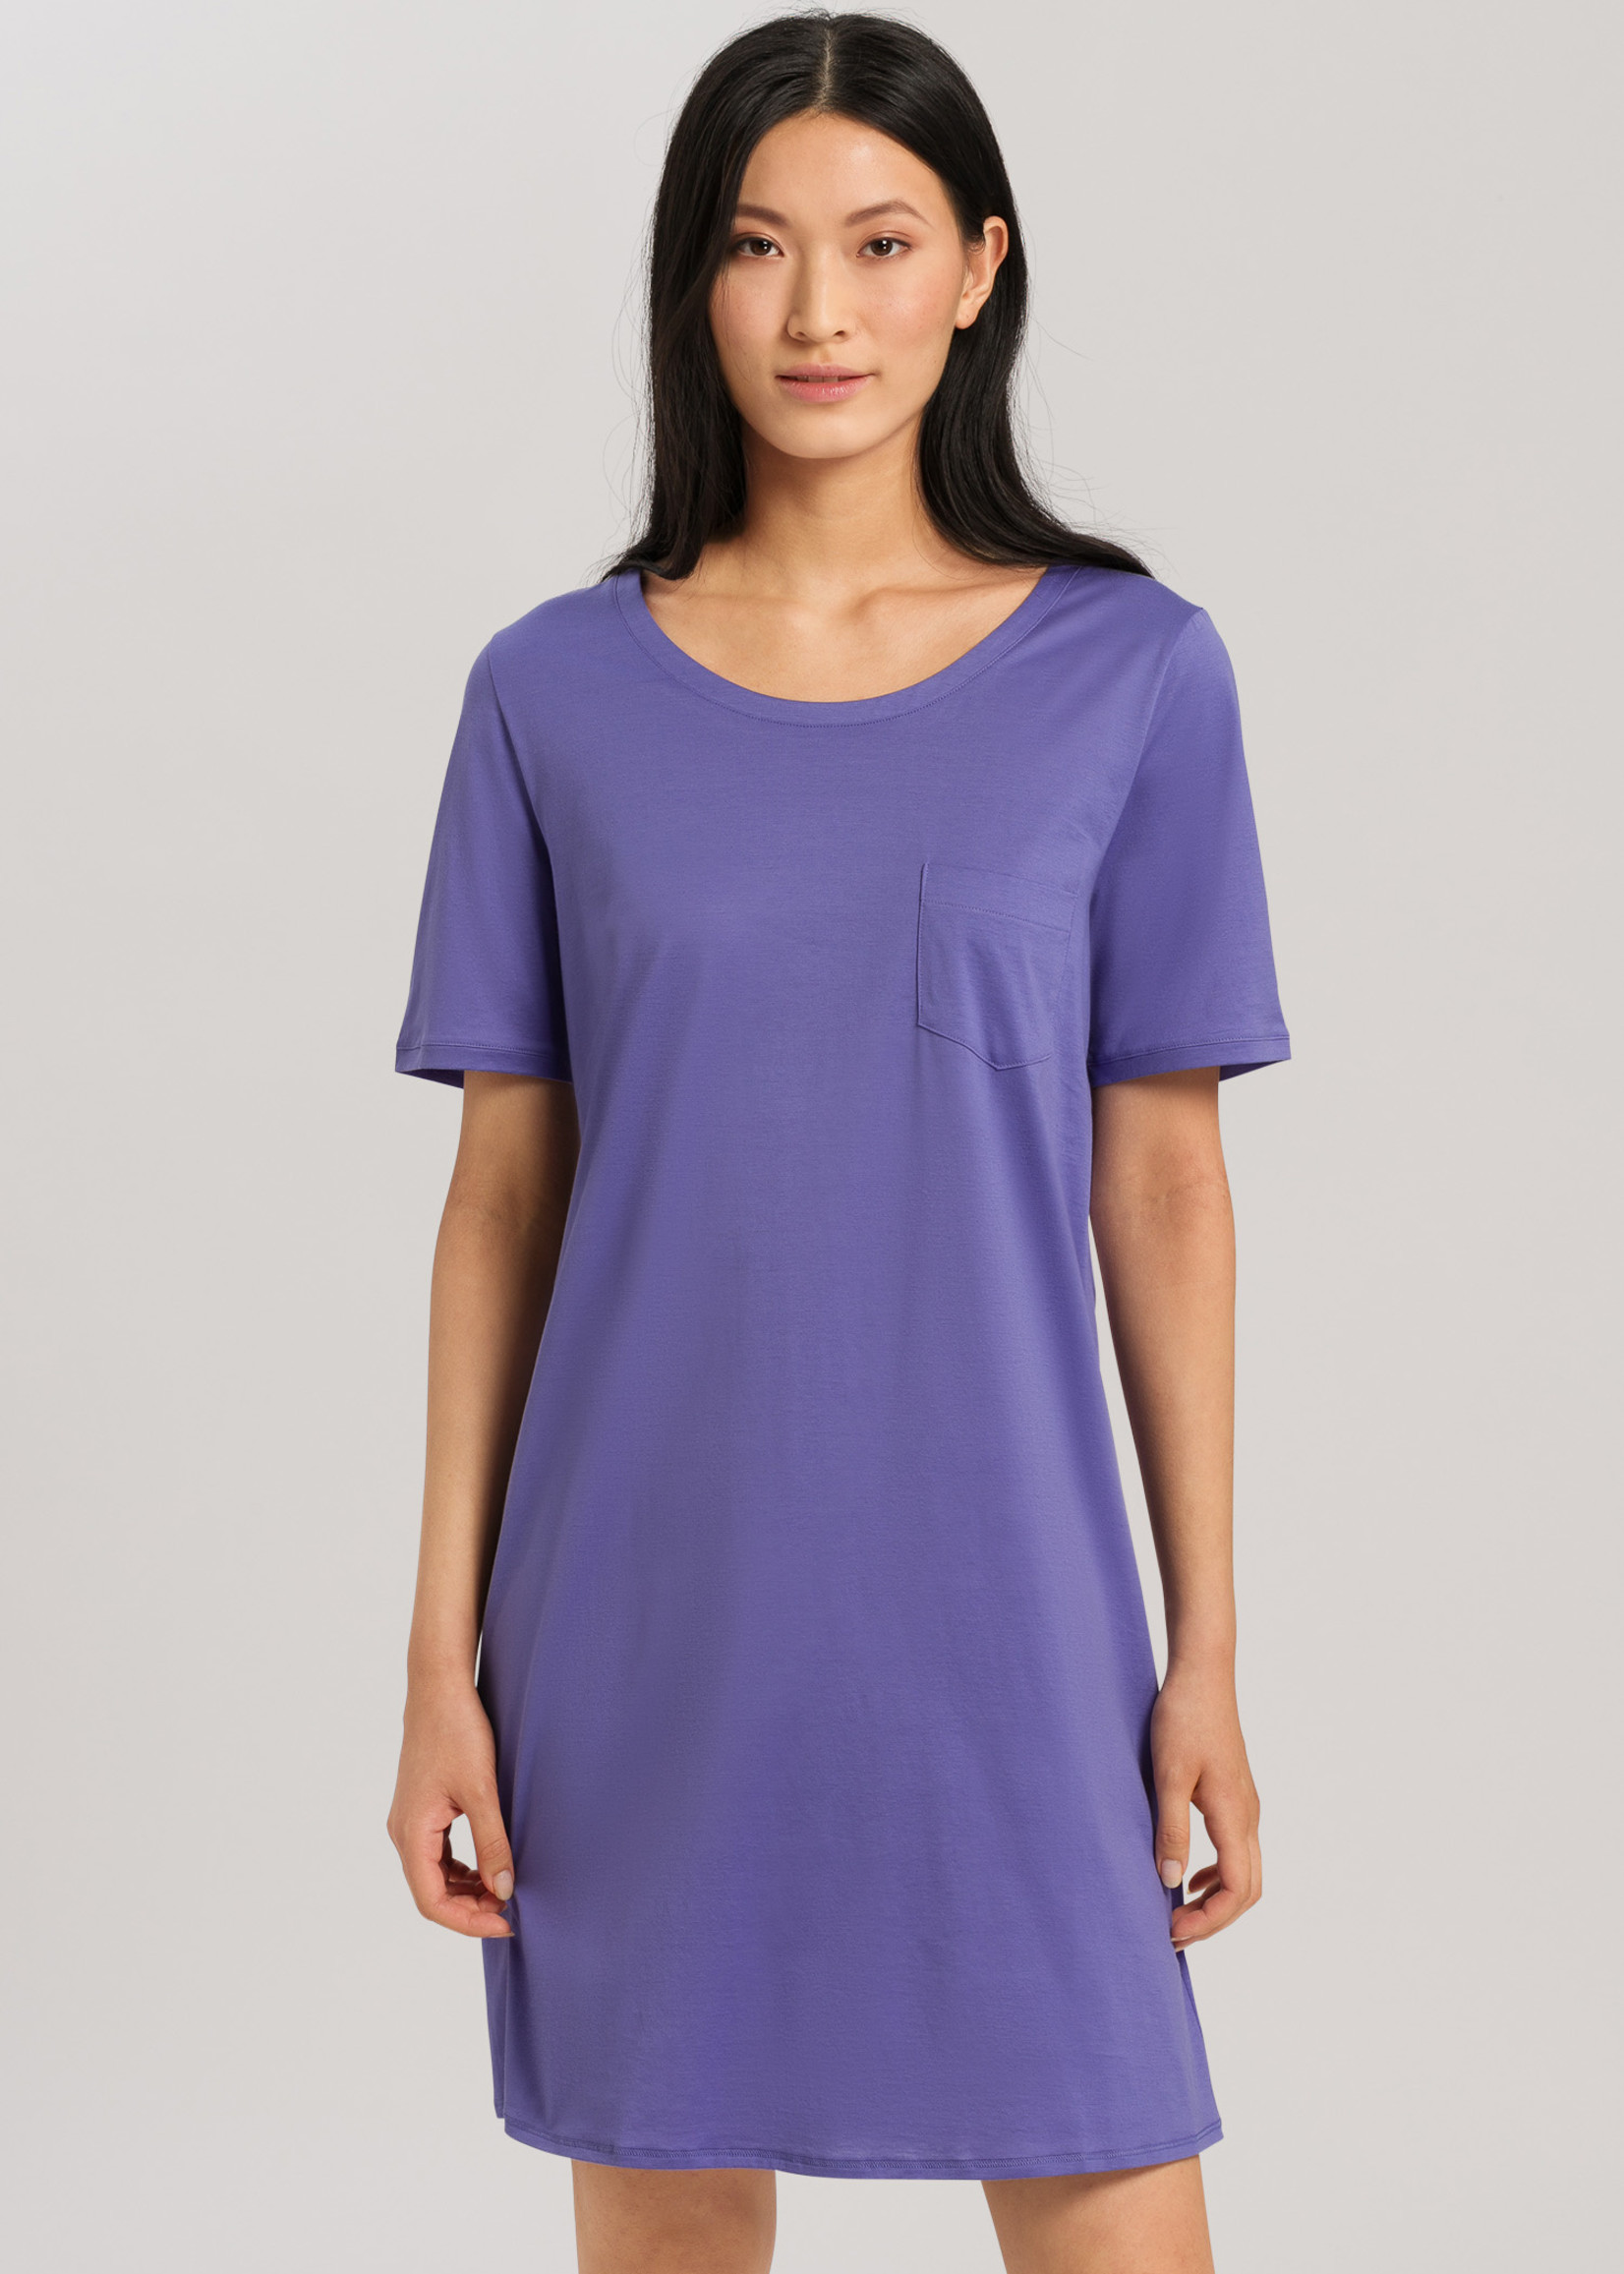 Hanro Cotton Deluxe Fashion Short Sleeve Nightshirt